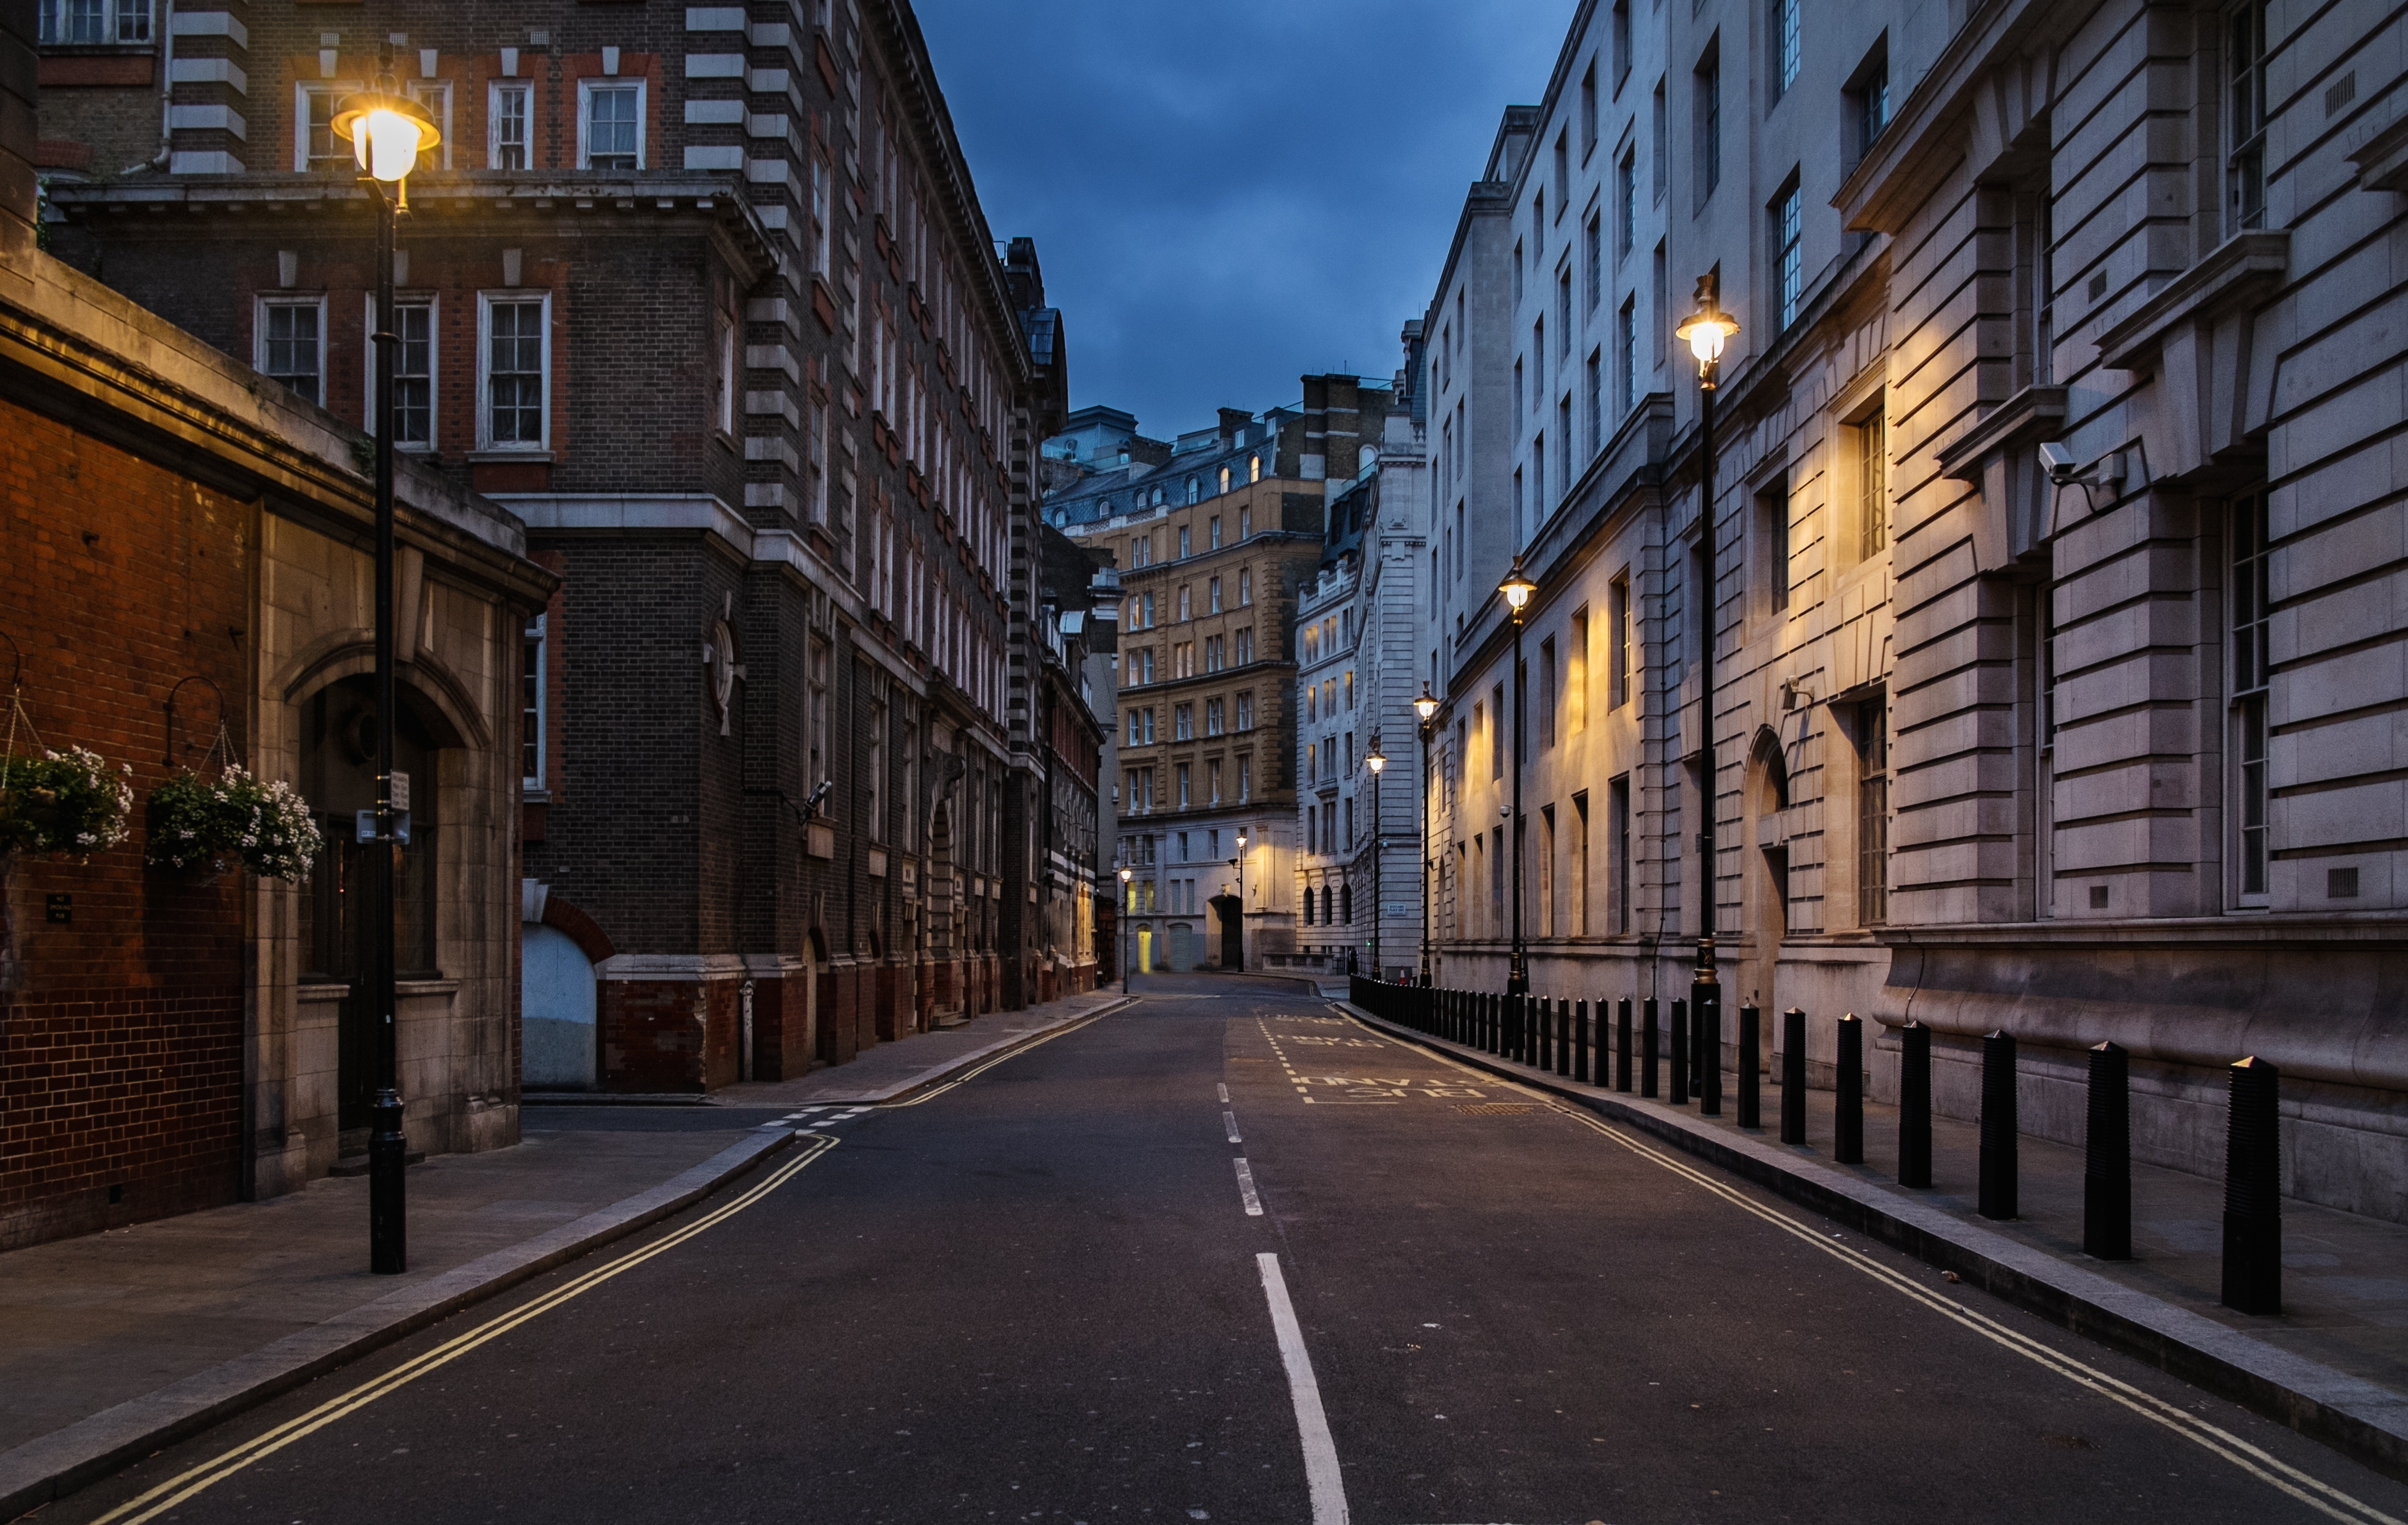 Empty street at night | Source: Shutterstock